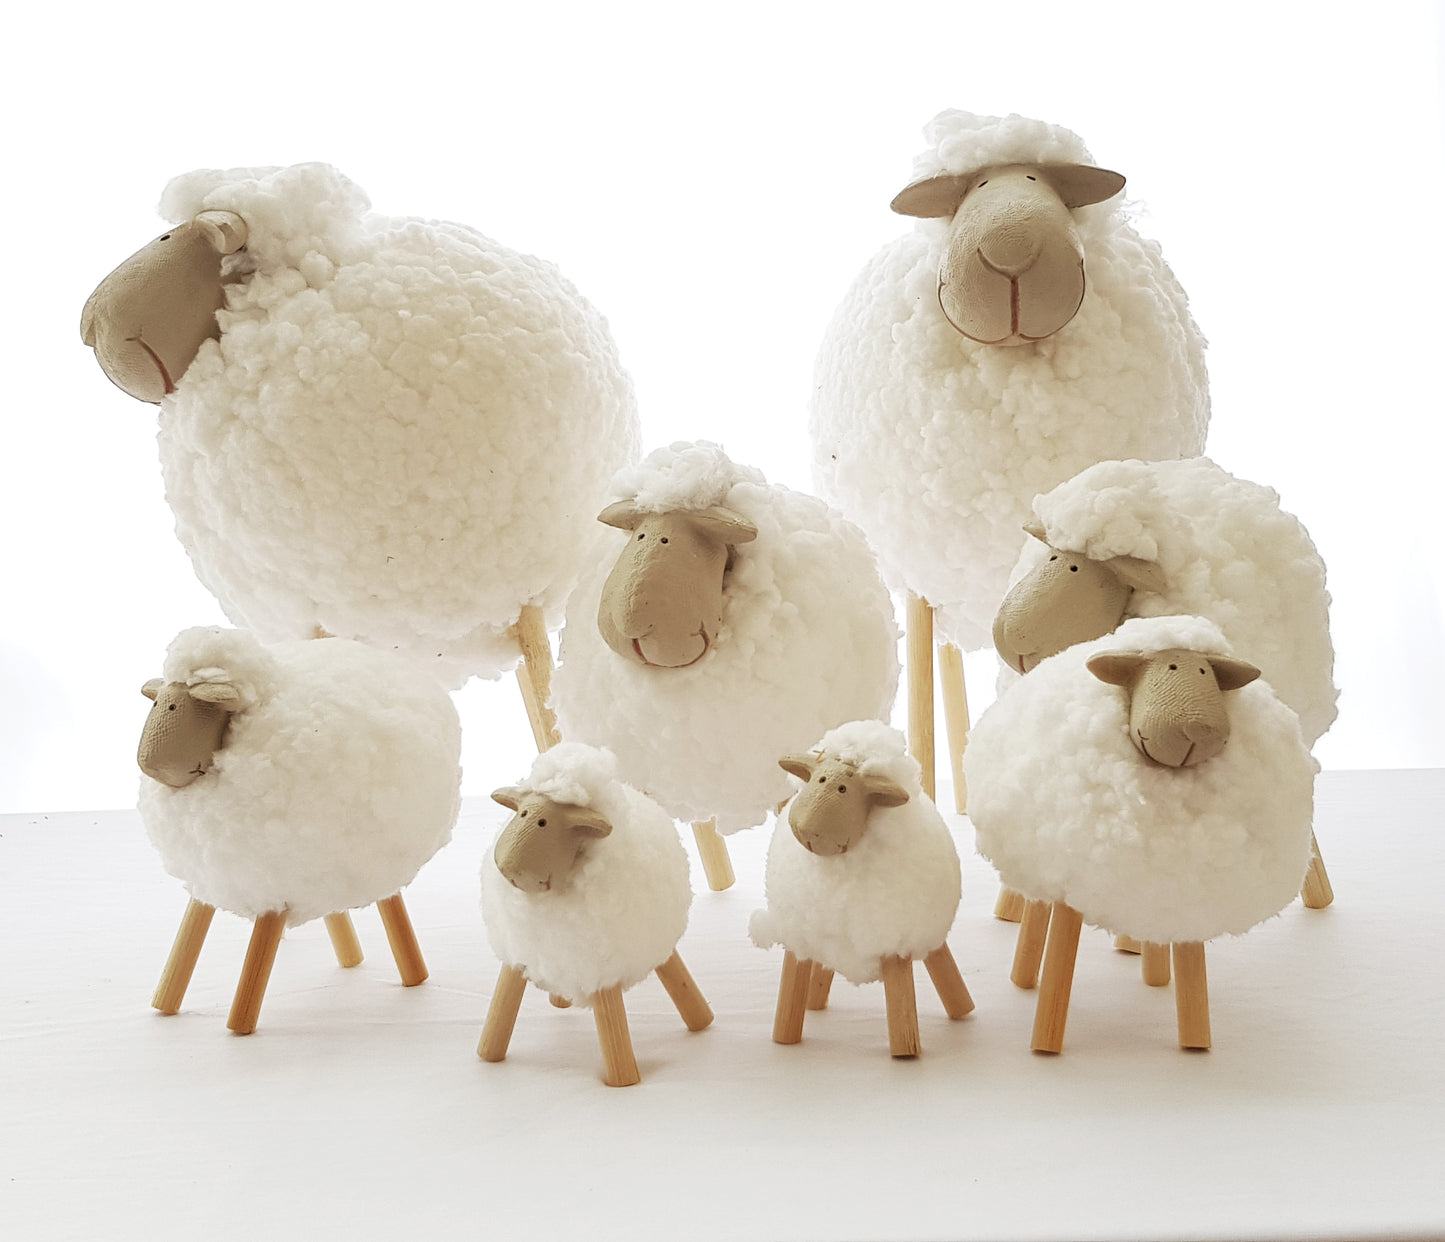 Miniature Sheep Models